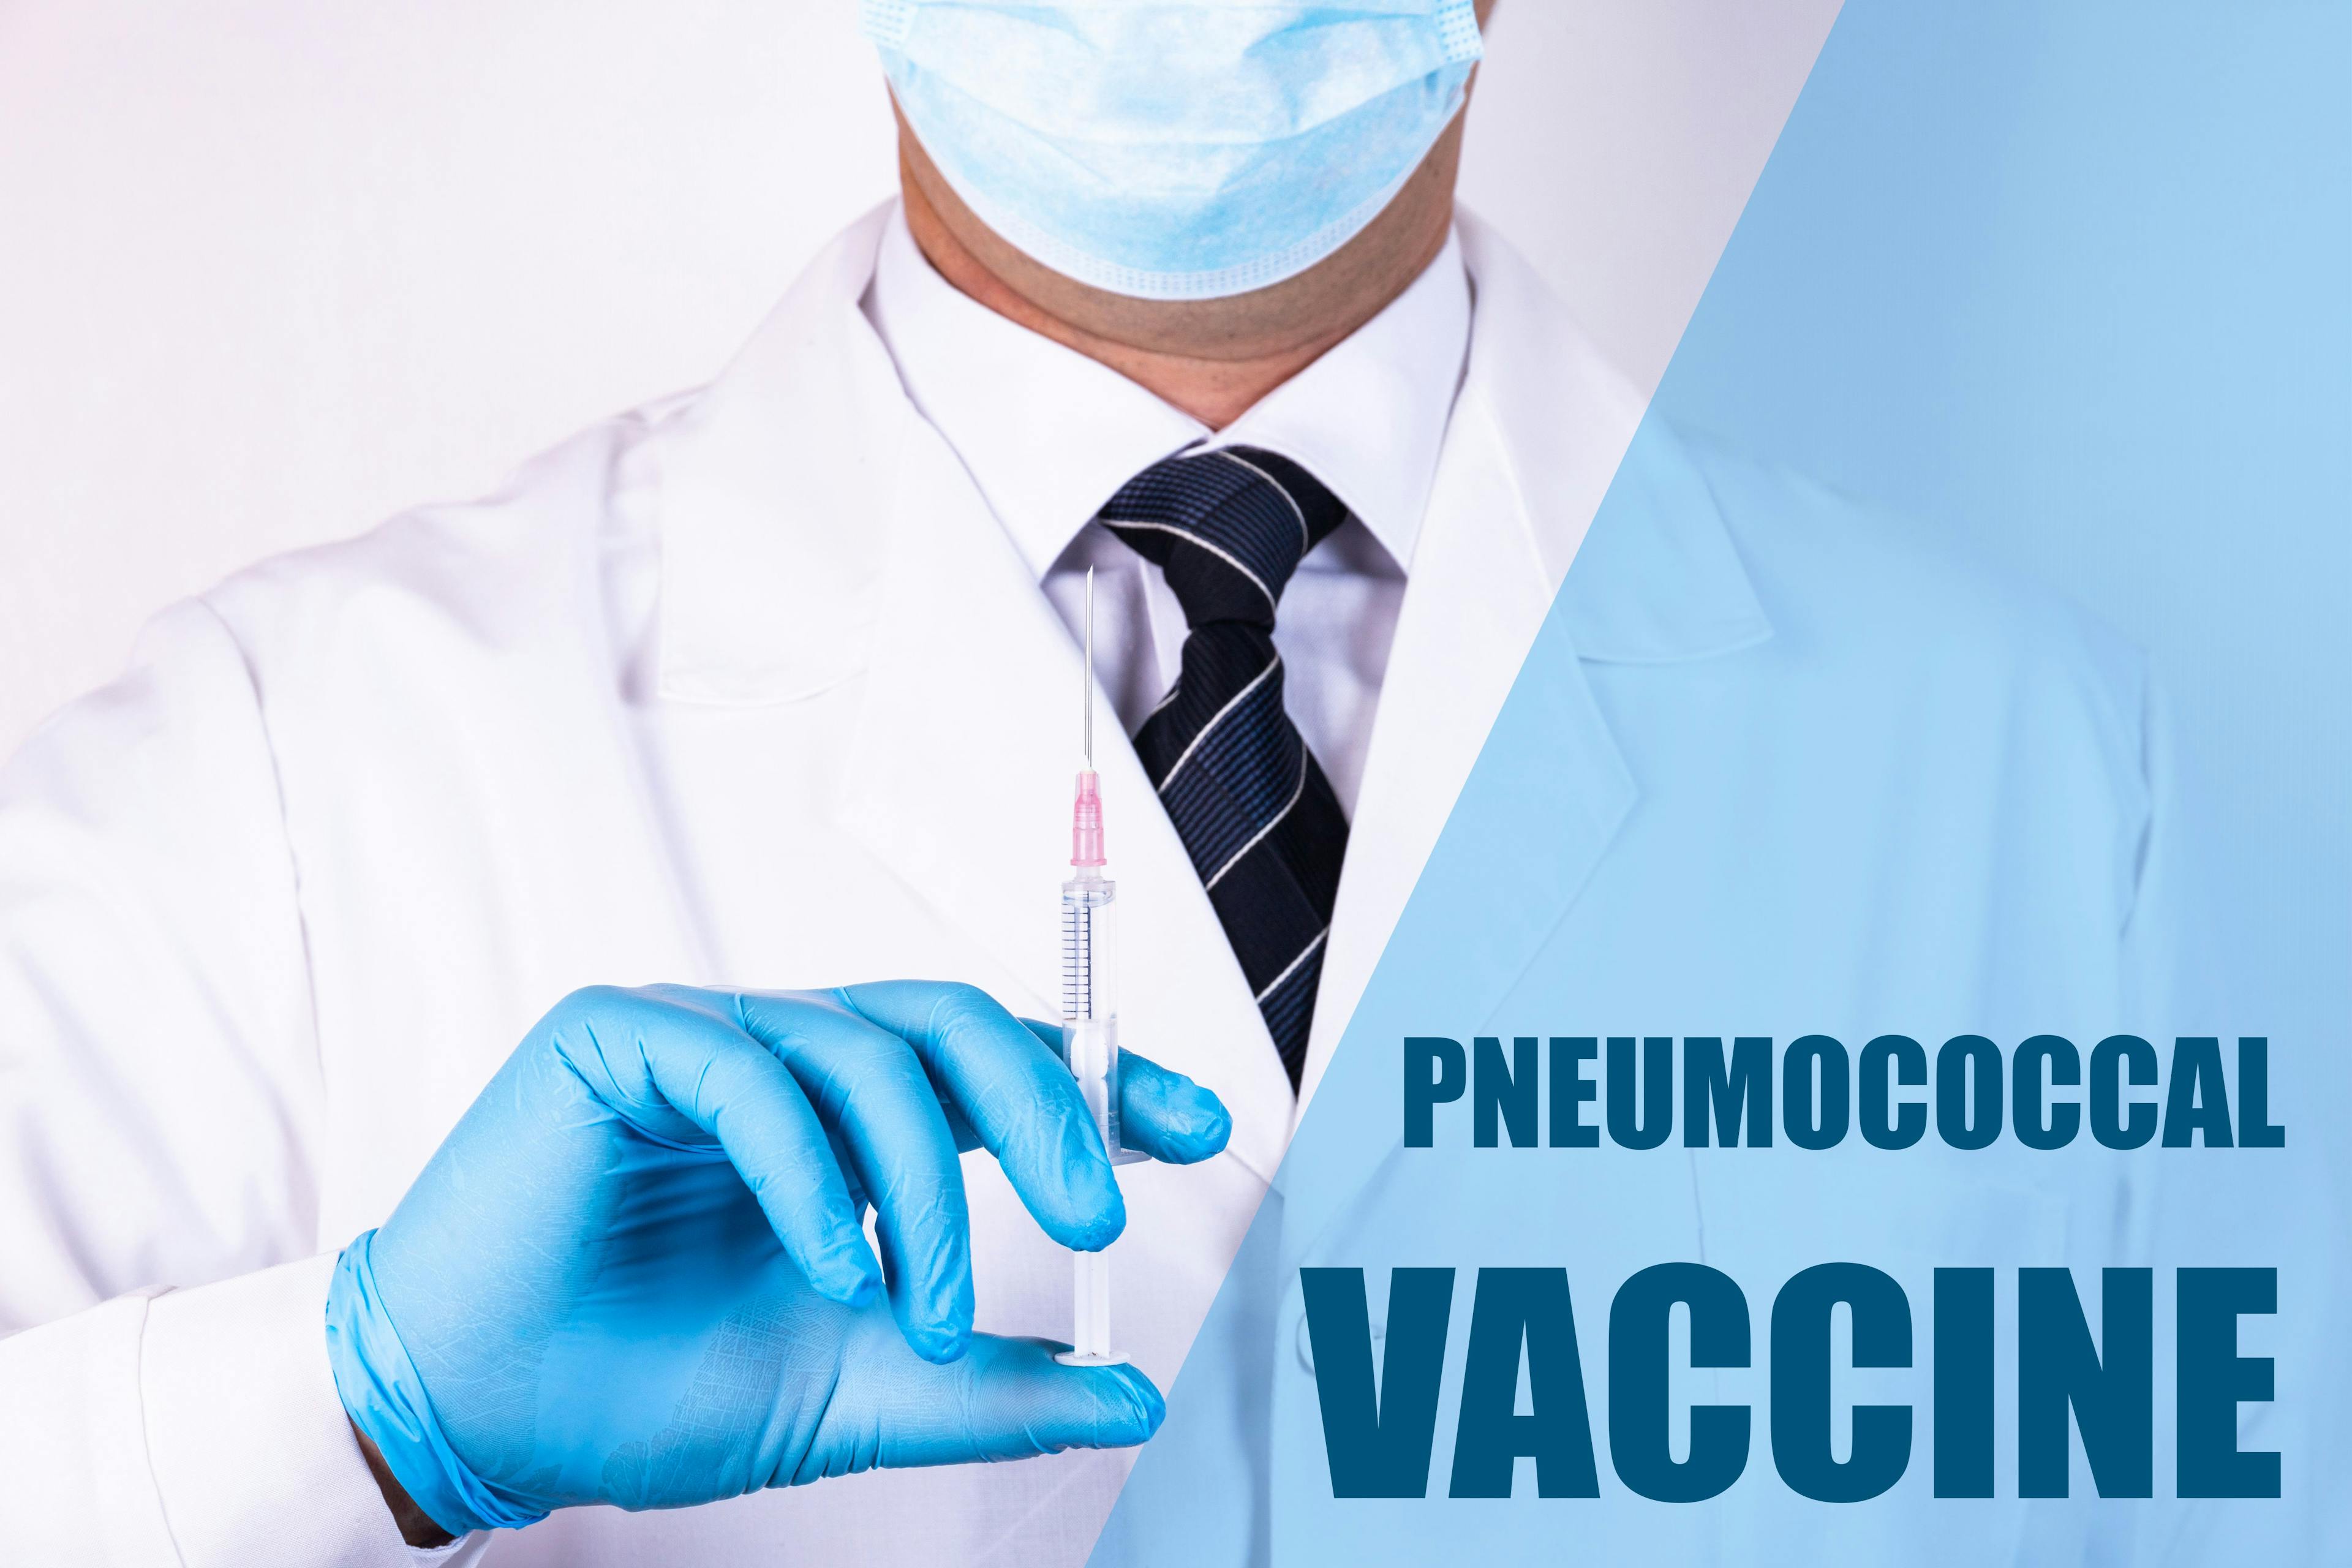 Vaxcyte’s Pneumococcal Vaccine Receives FDA Breakthrough Therapy Designation